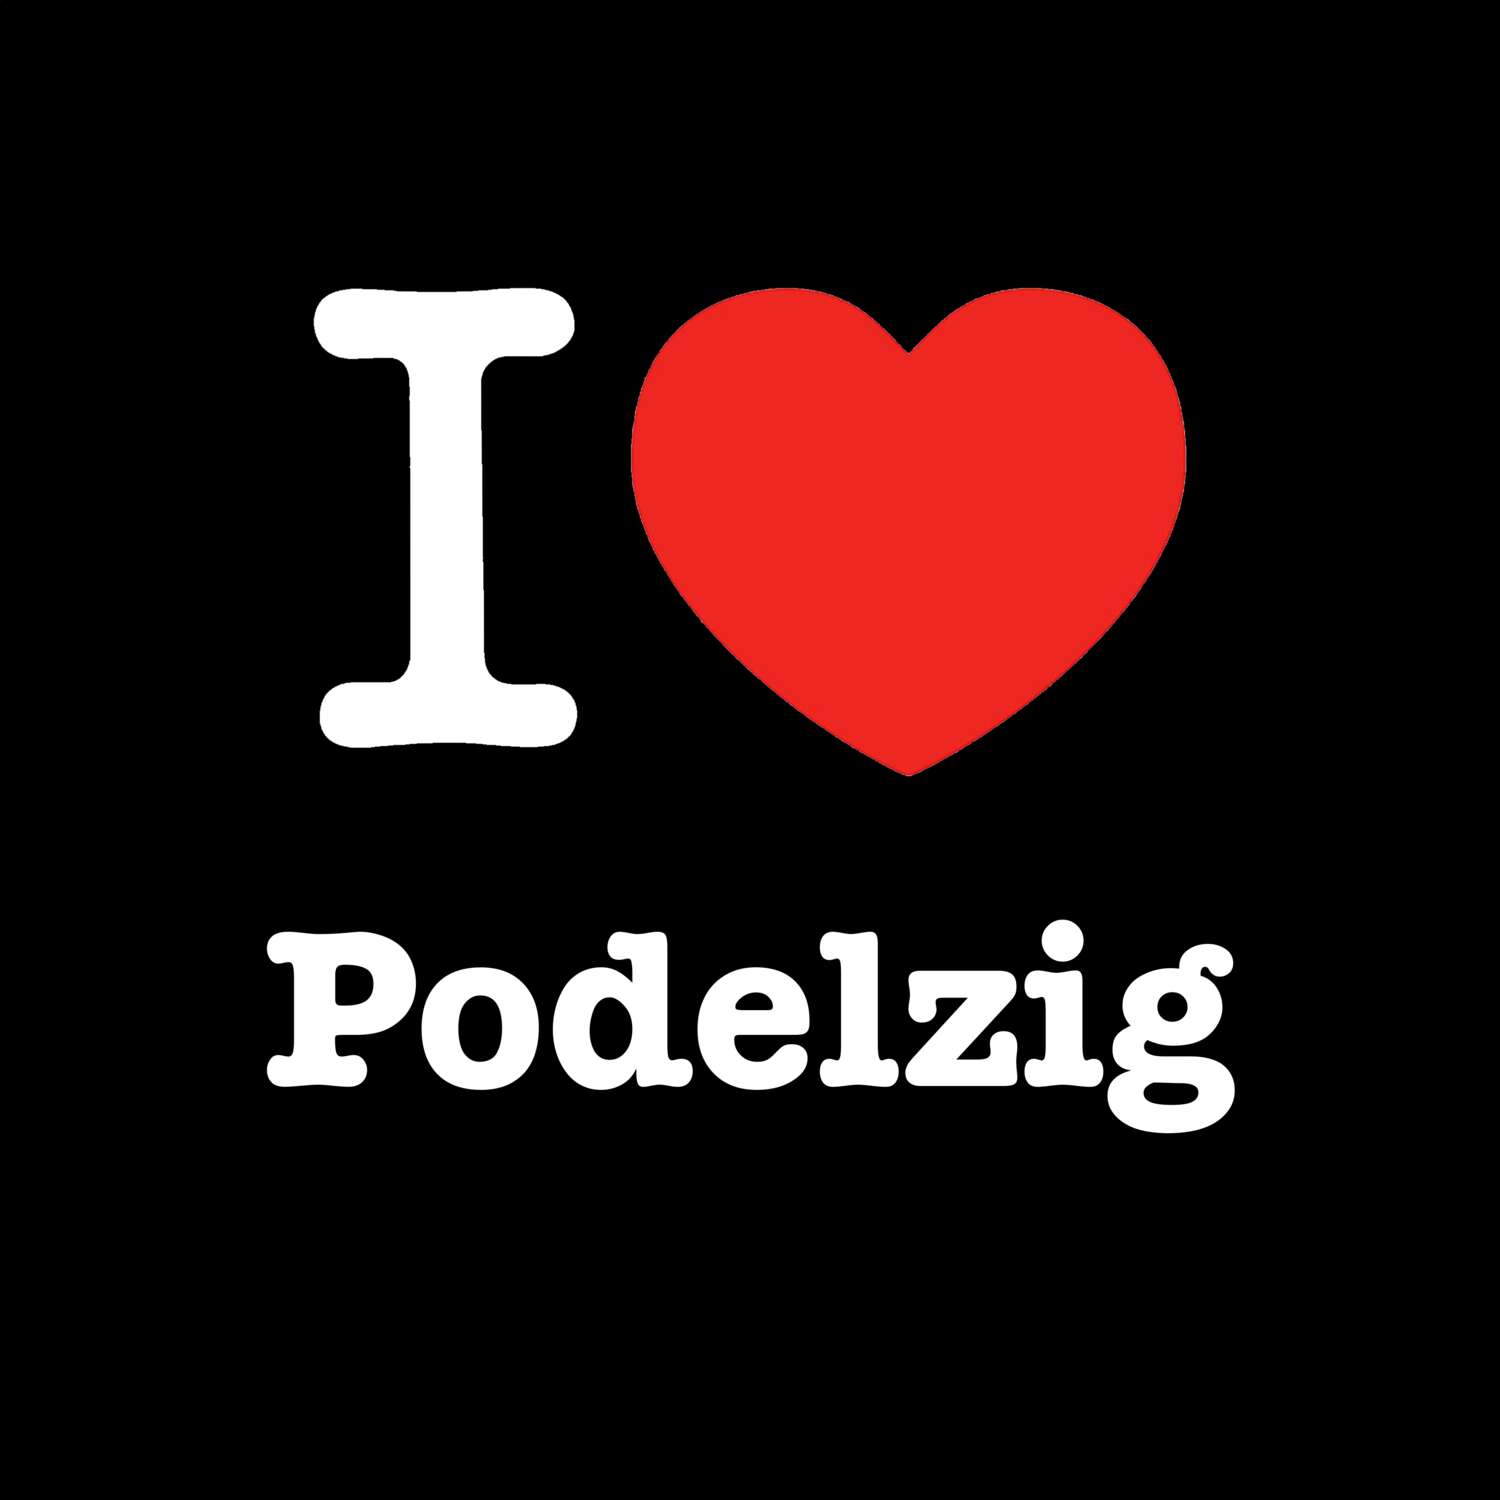 Podelzig T-Shirt »I love«